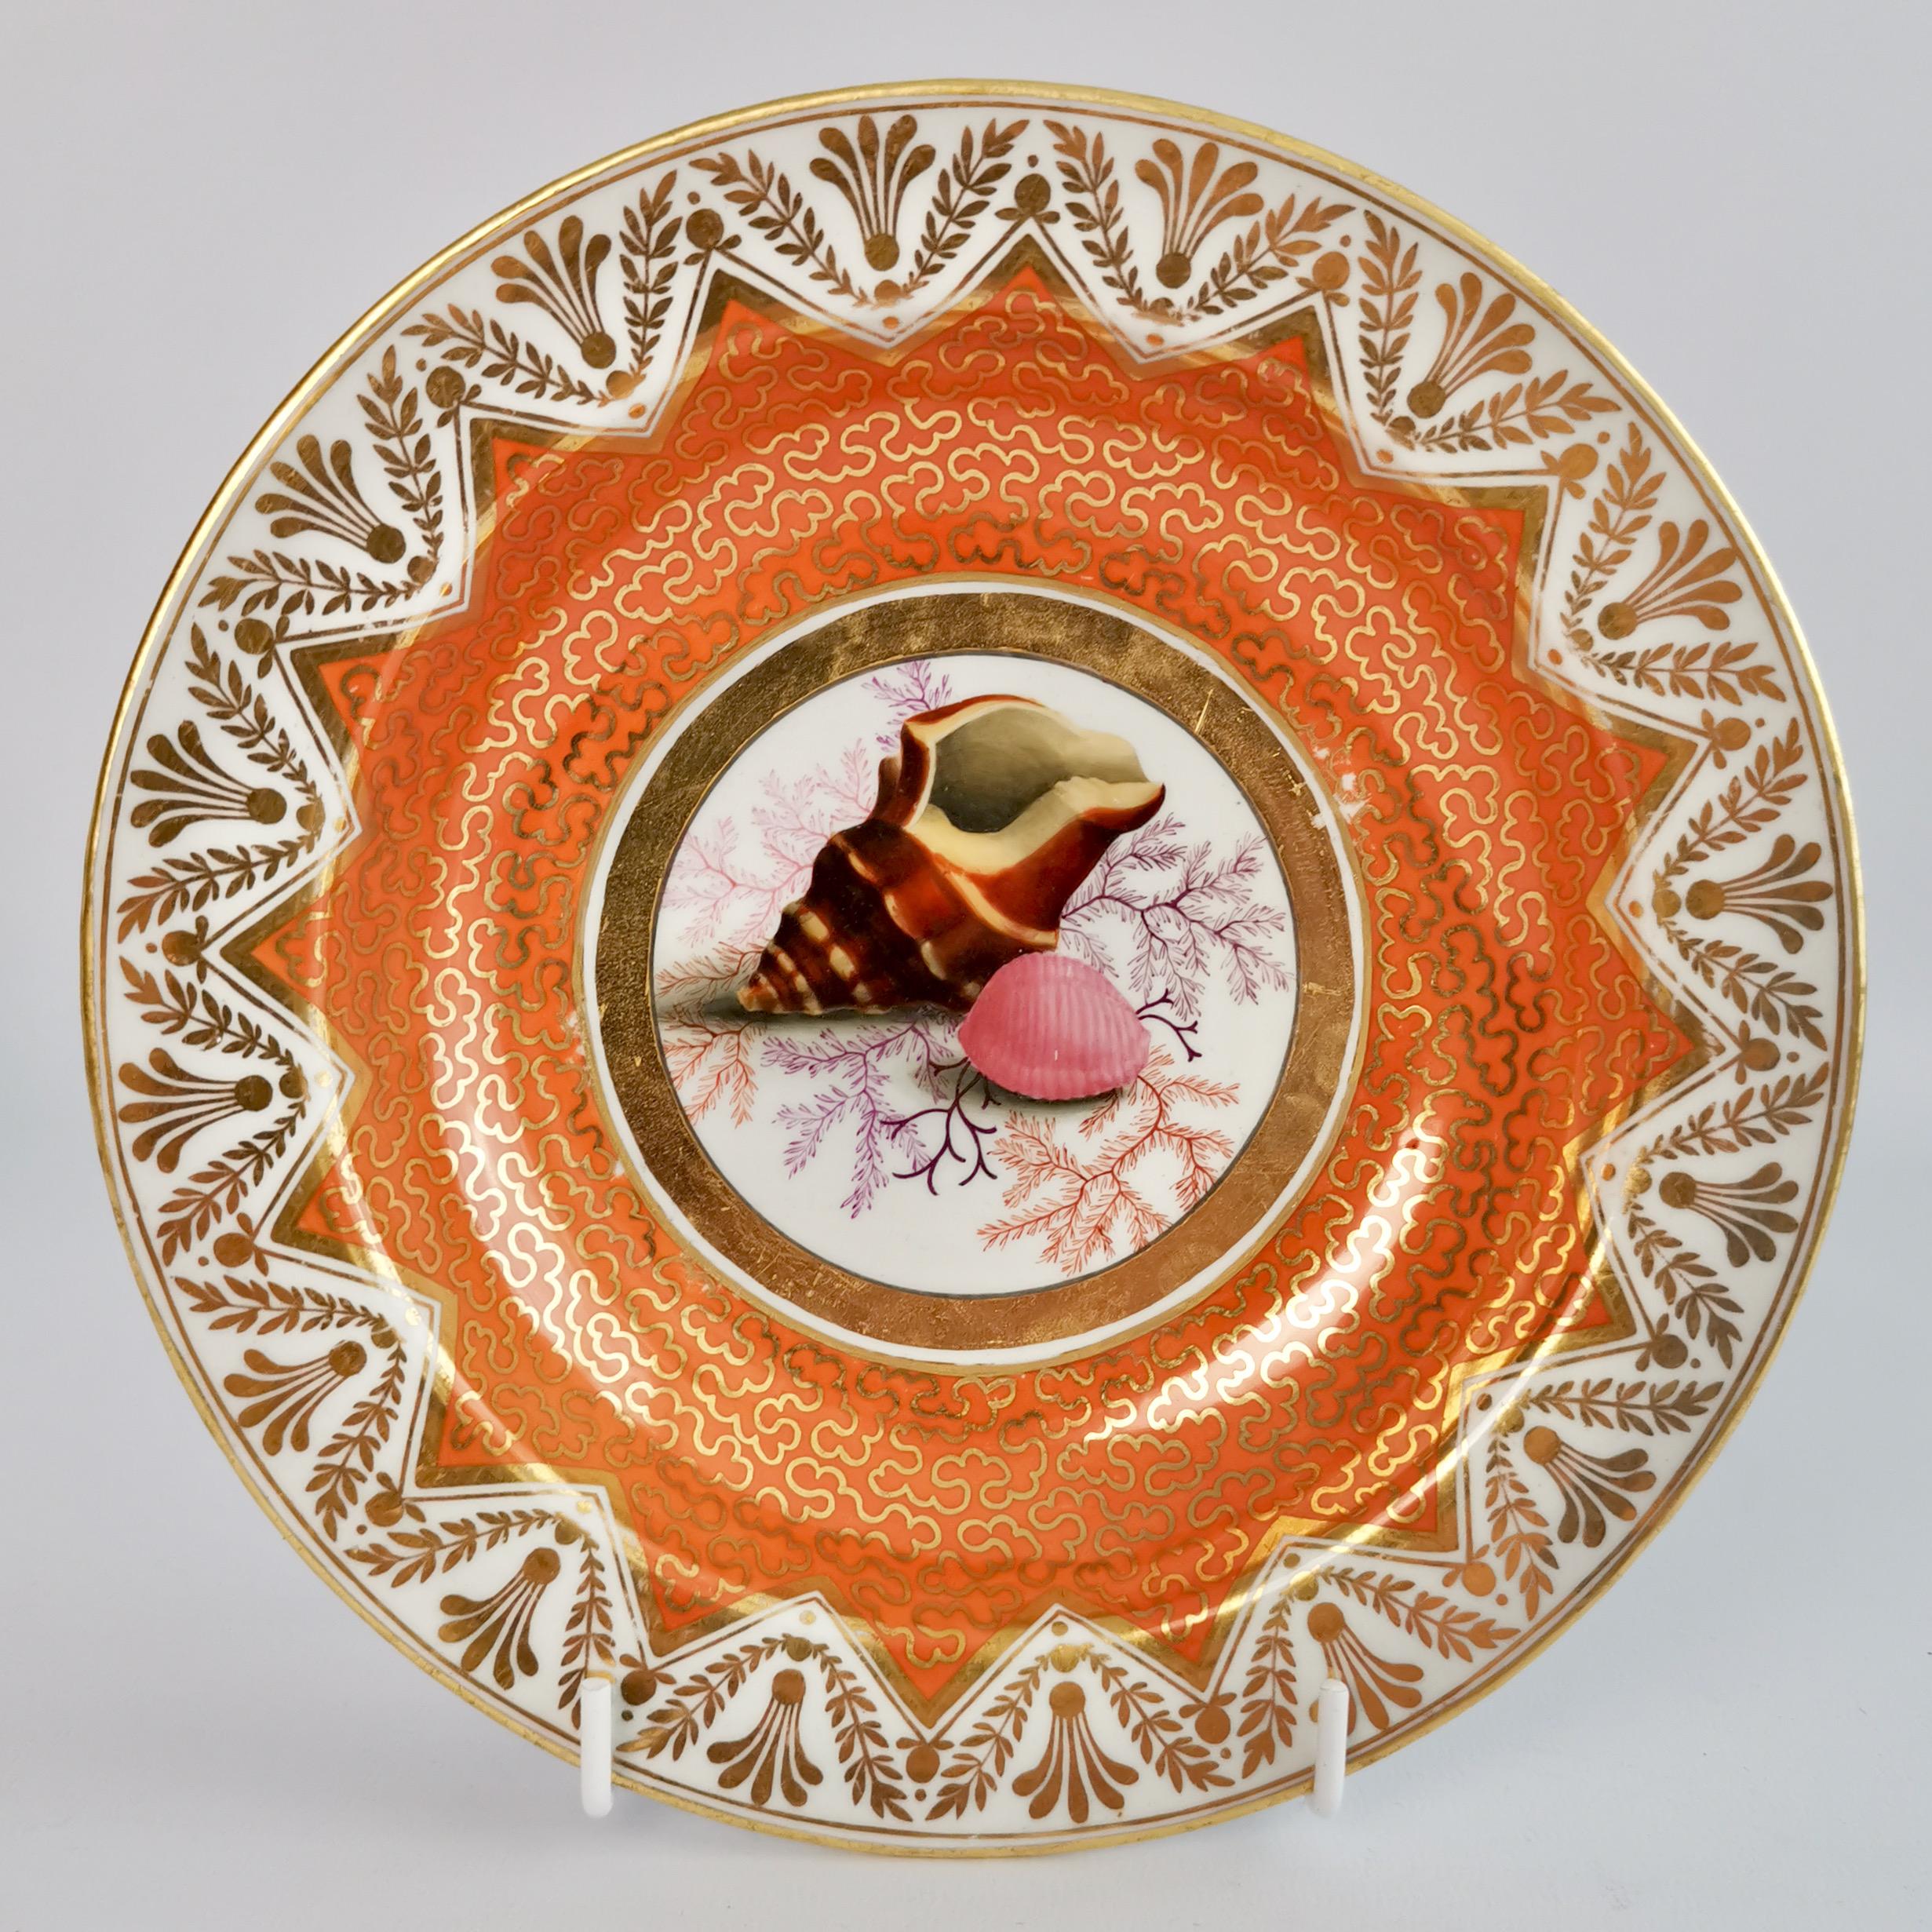 Early 19th Century Chamberlains Worcester Porcelain Dessert Service, Orange, Regency, circa 1815